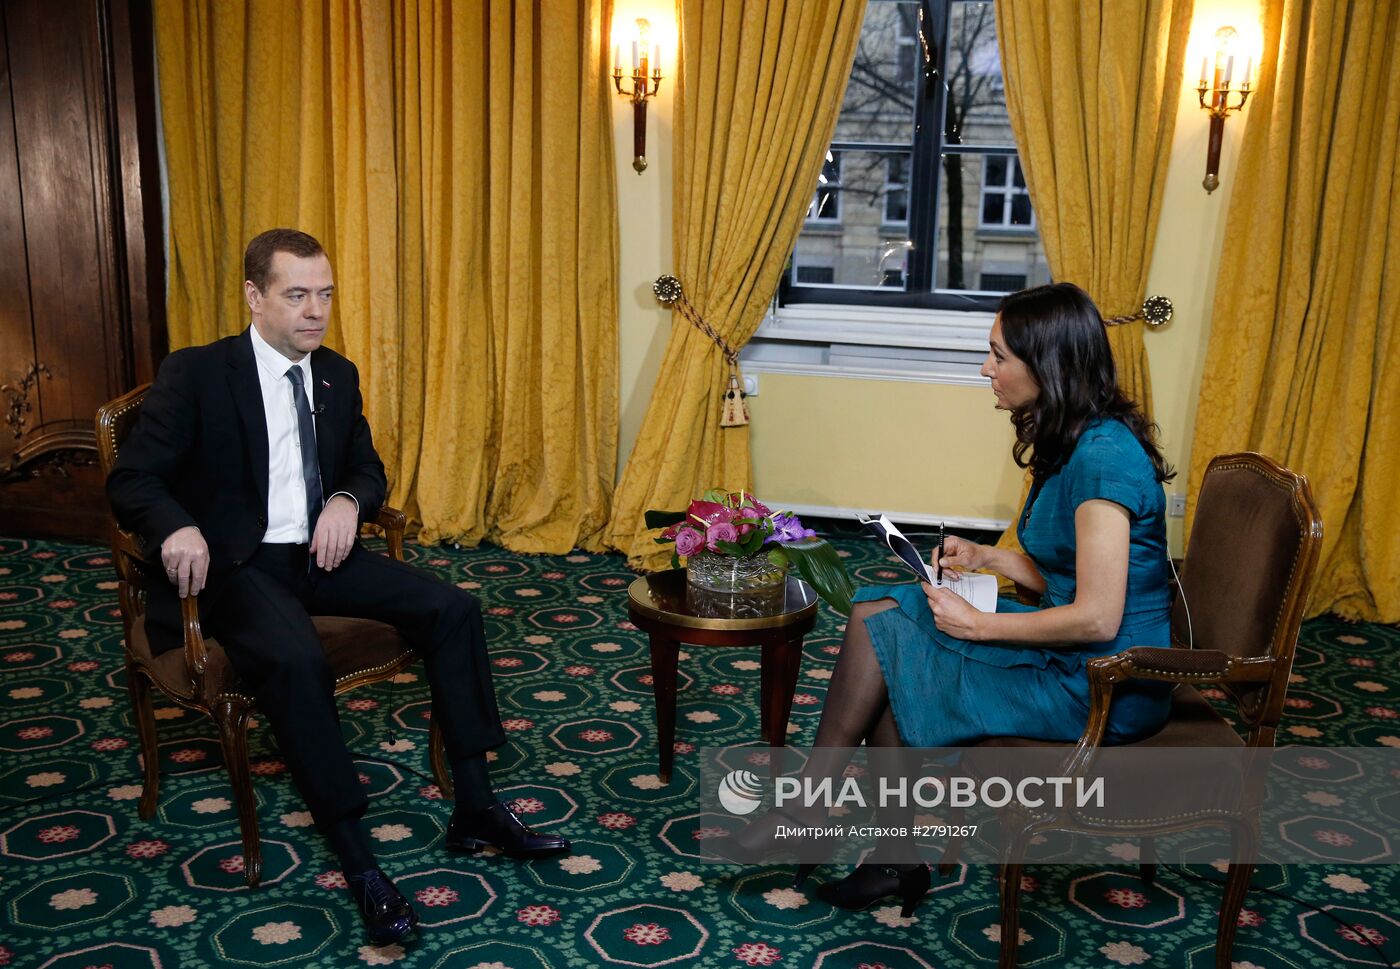 Интервью премьер-министра РФ Д. Медведева телеканалу Euronews